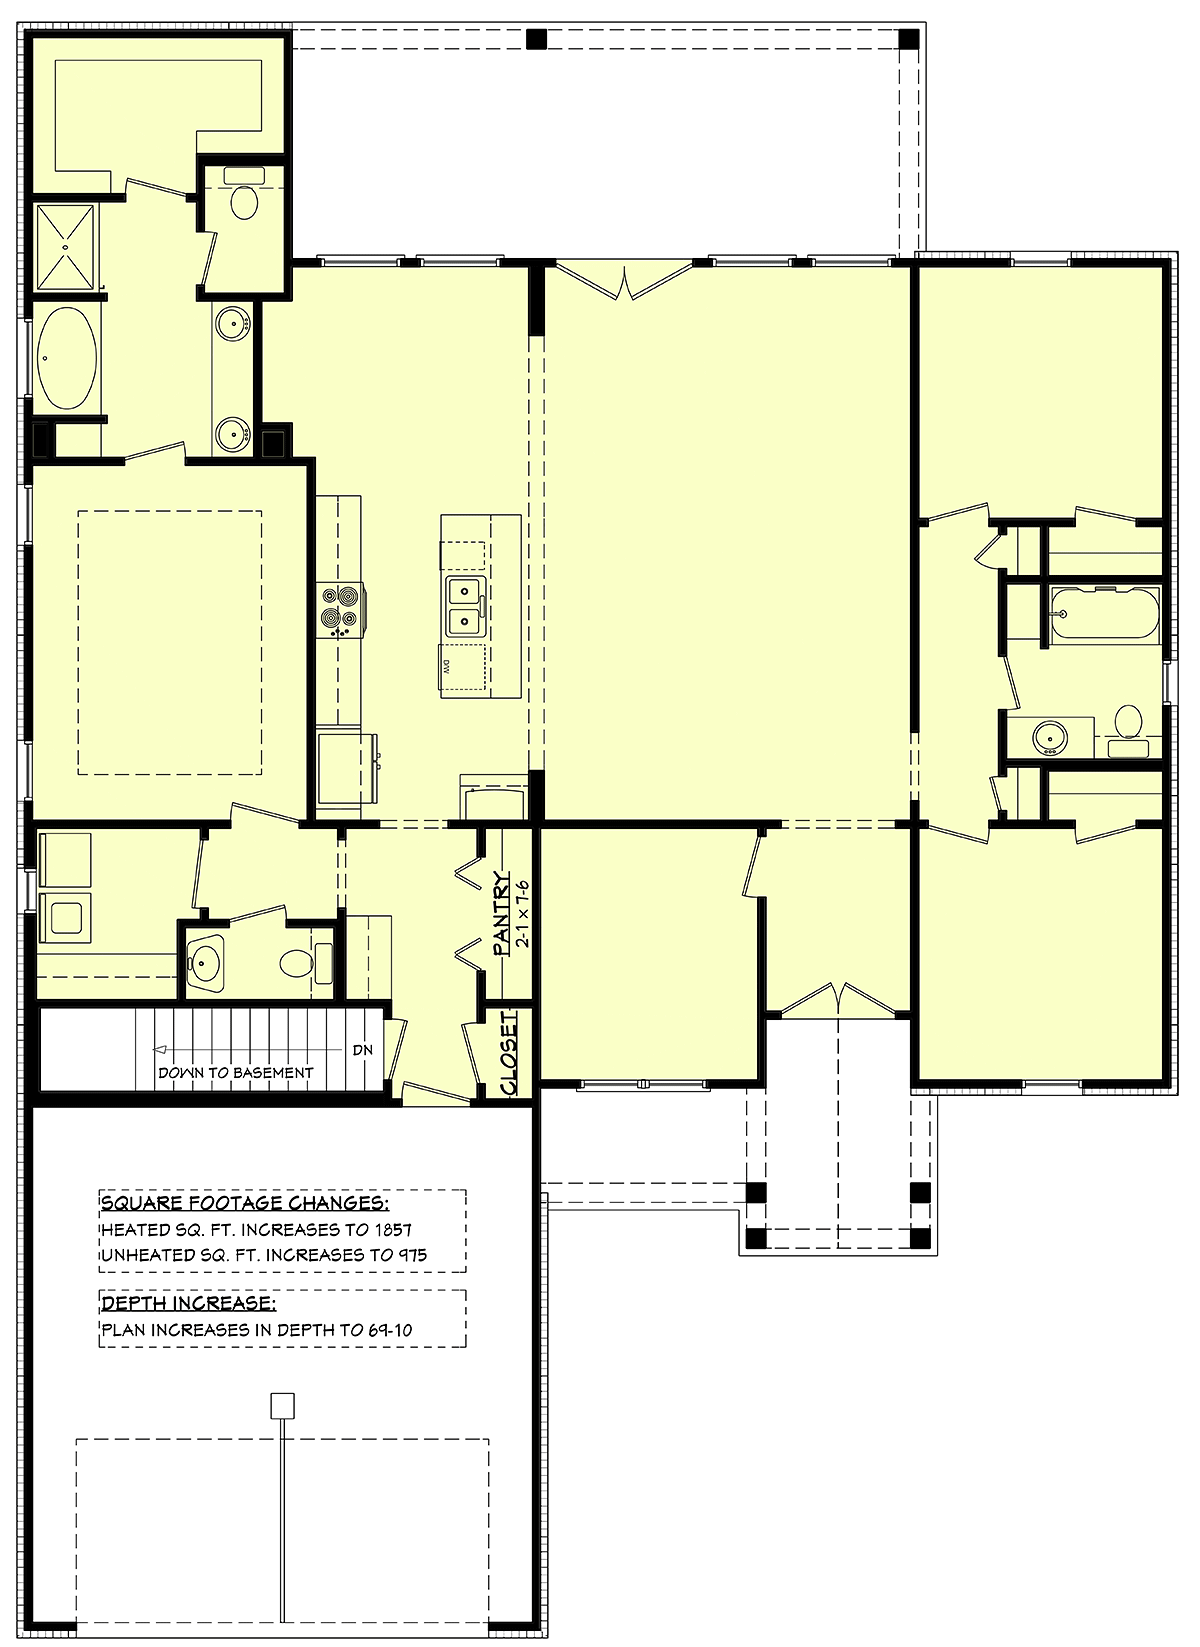 House Plan 80856 Alternate Level One